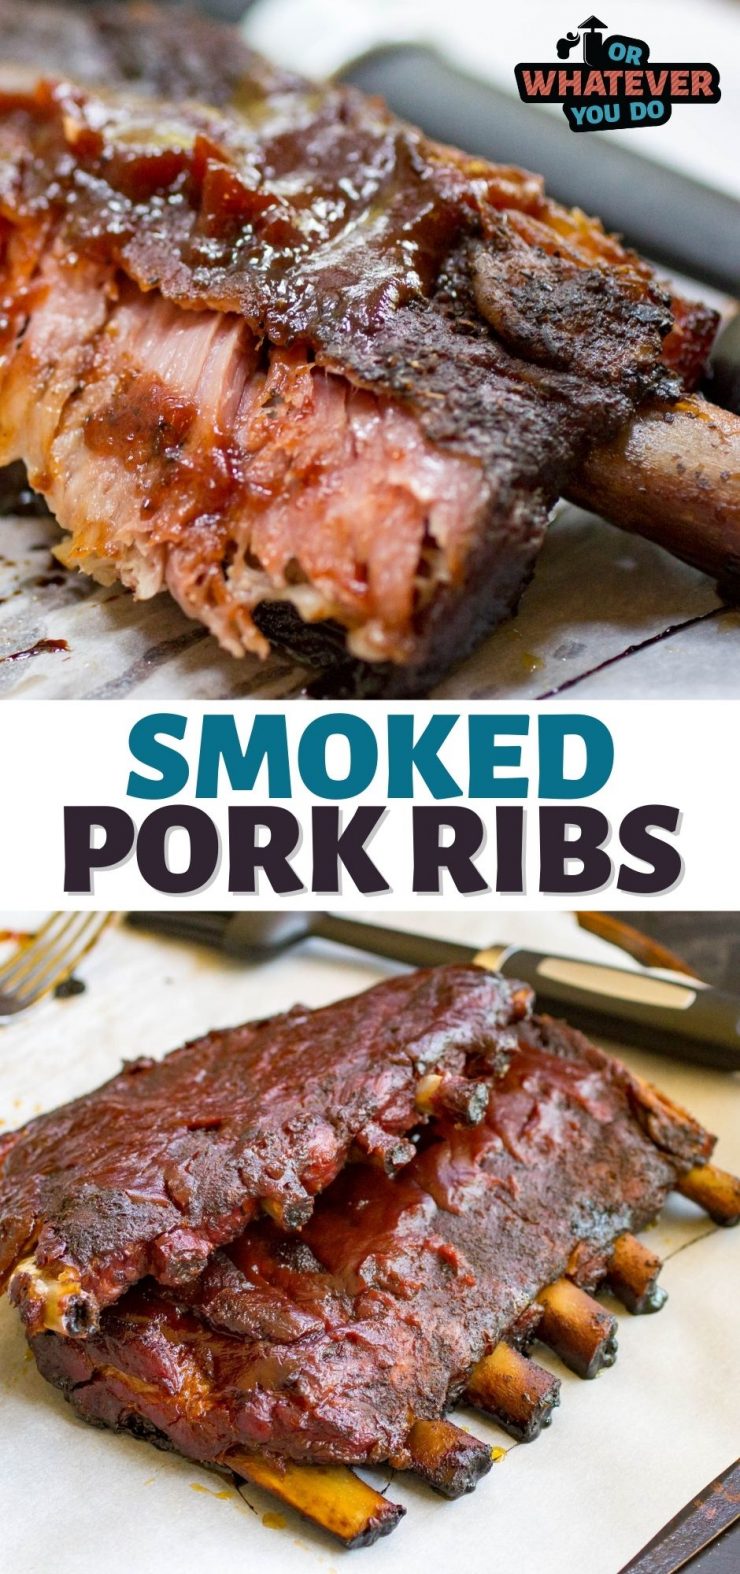 Traeger Smoked Pork Ribs